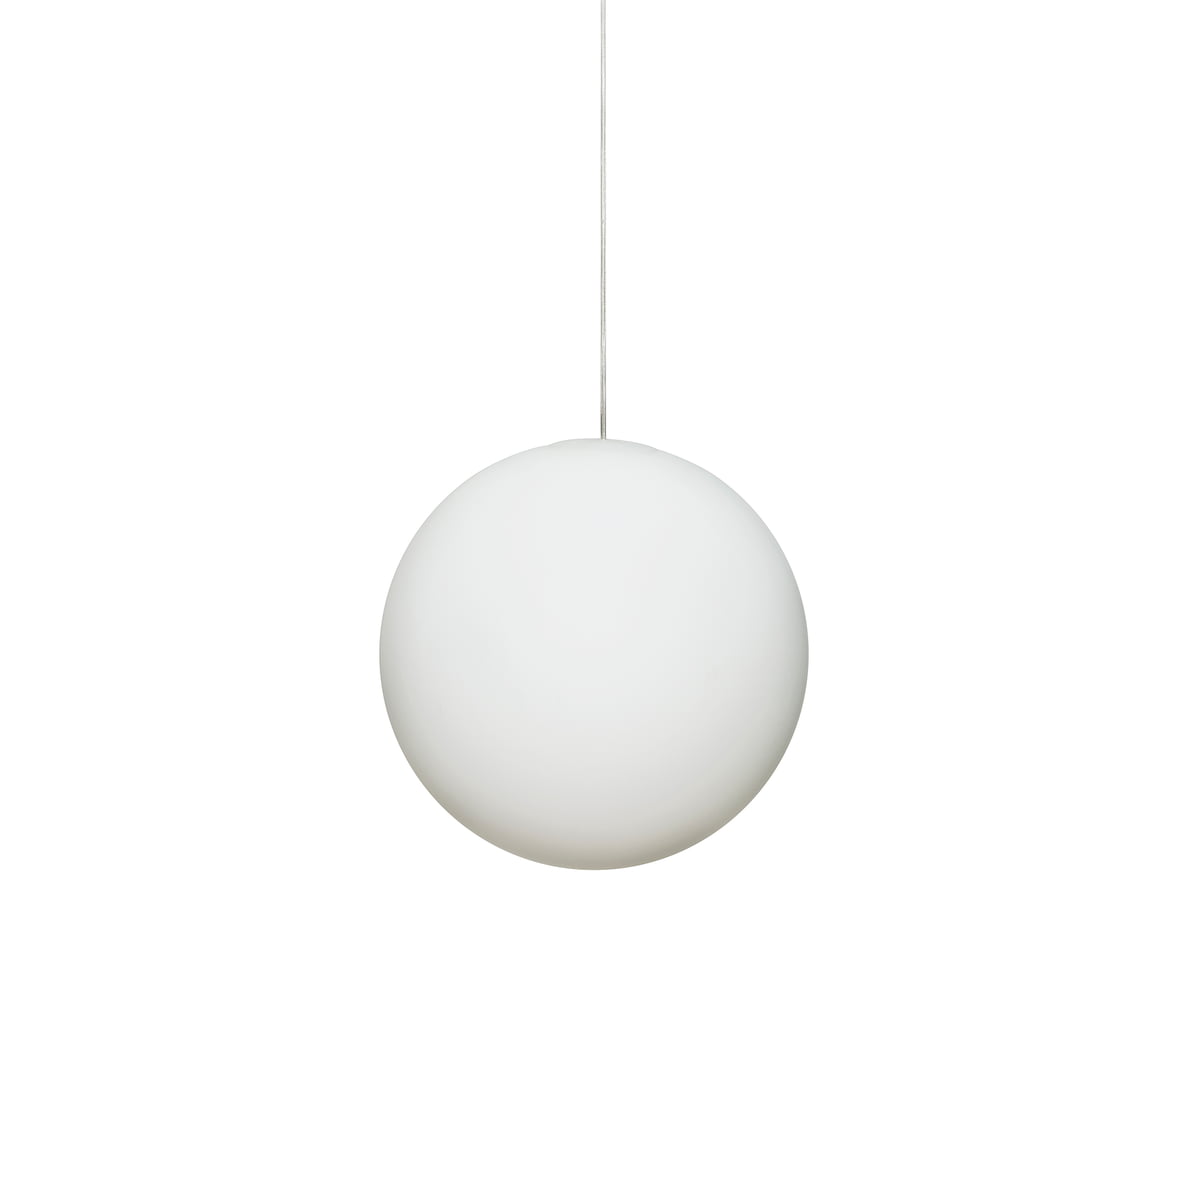 Verslaafde herhaling Presentator Luna pendant lamp by Design House Stockholm | Connox